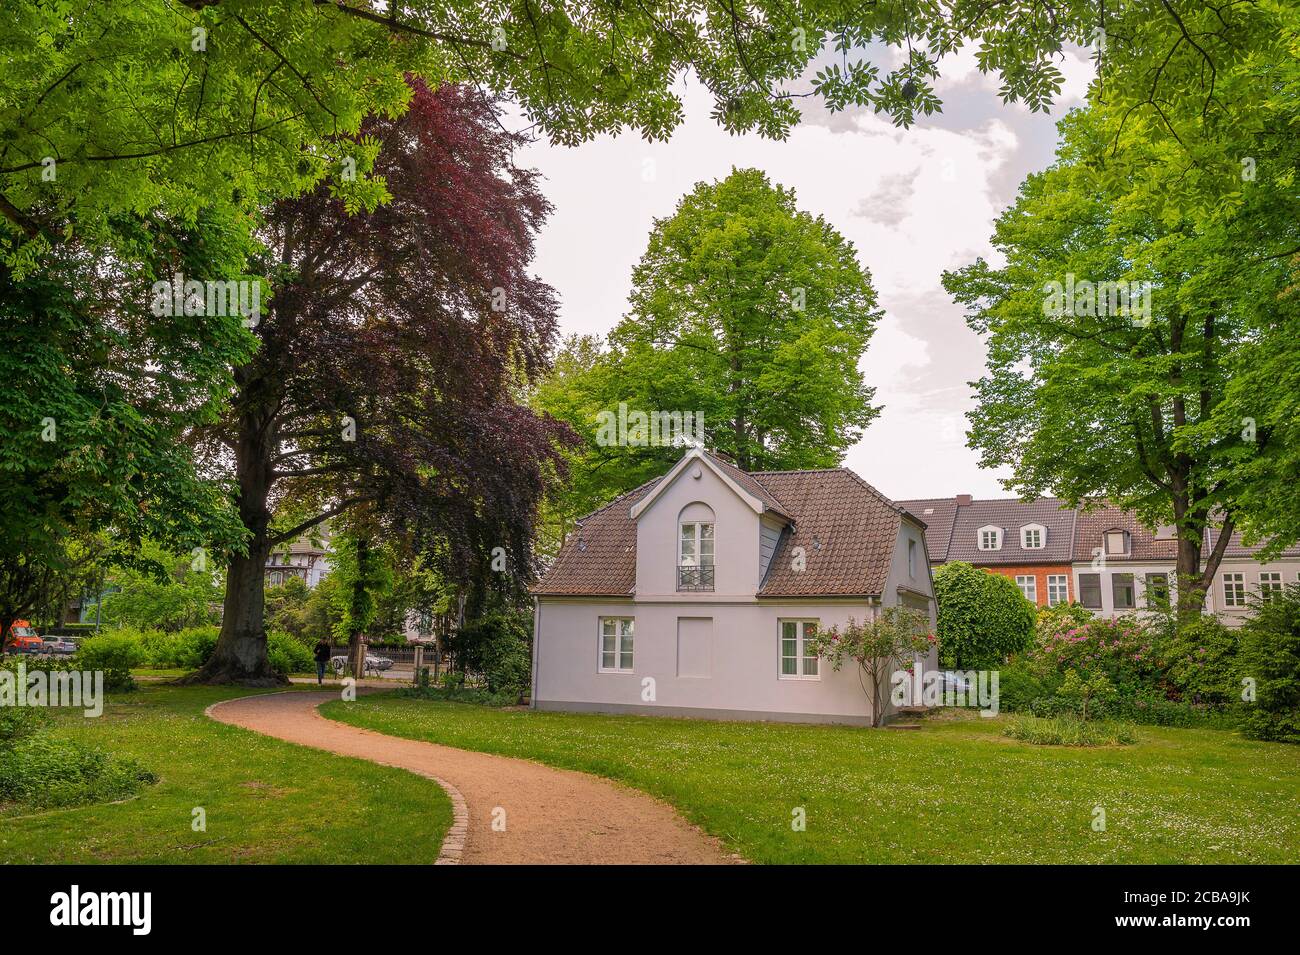 Heine House at the Heine Park, Germany, Hamburg-Altona Stock Photo - Alamy